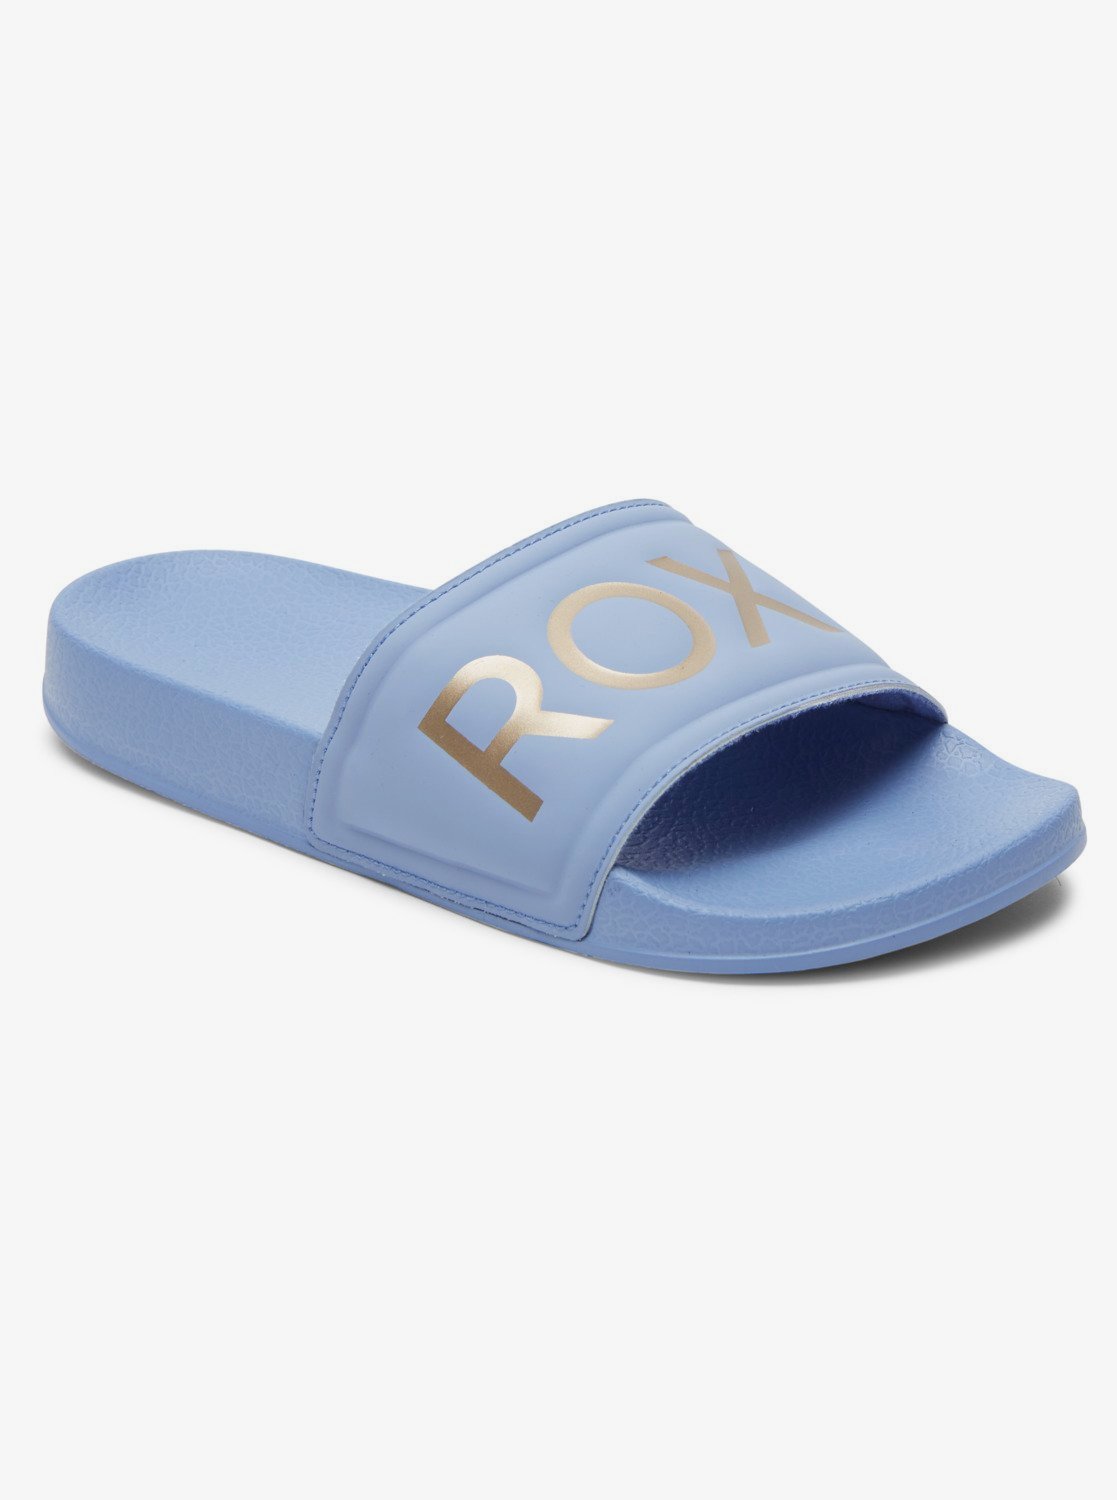 Roxy Blue Sandals for Women